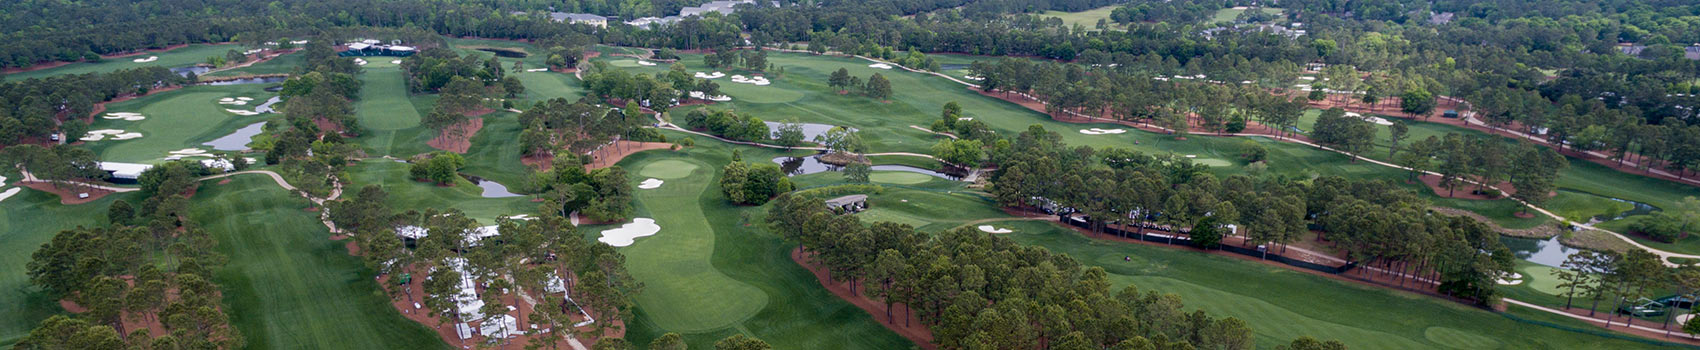 Golf Course Aerial Photo